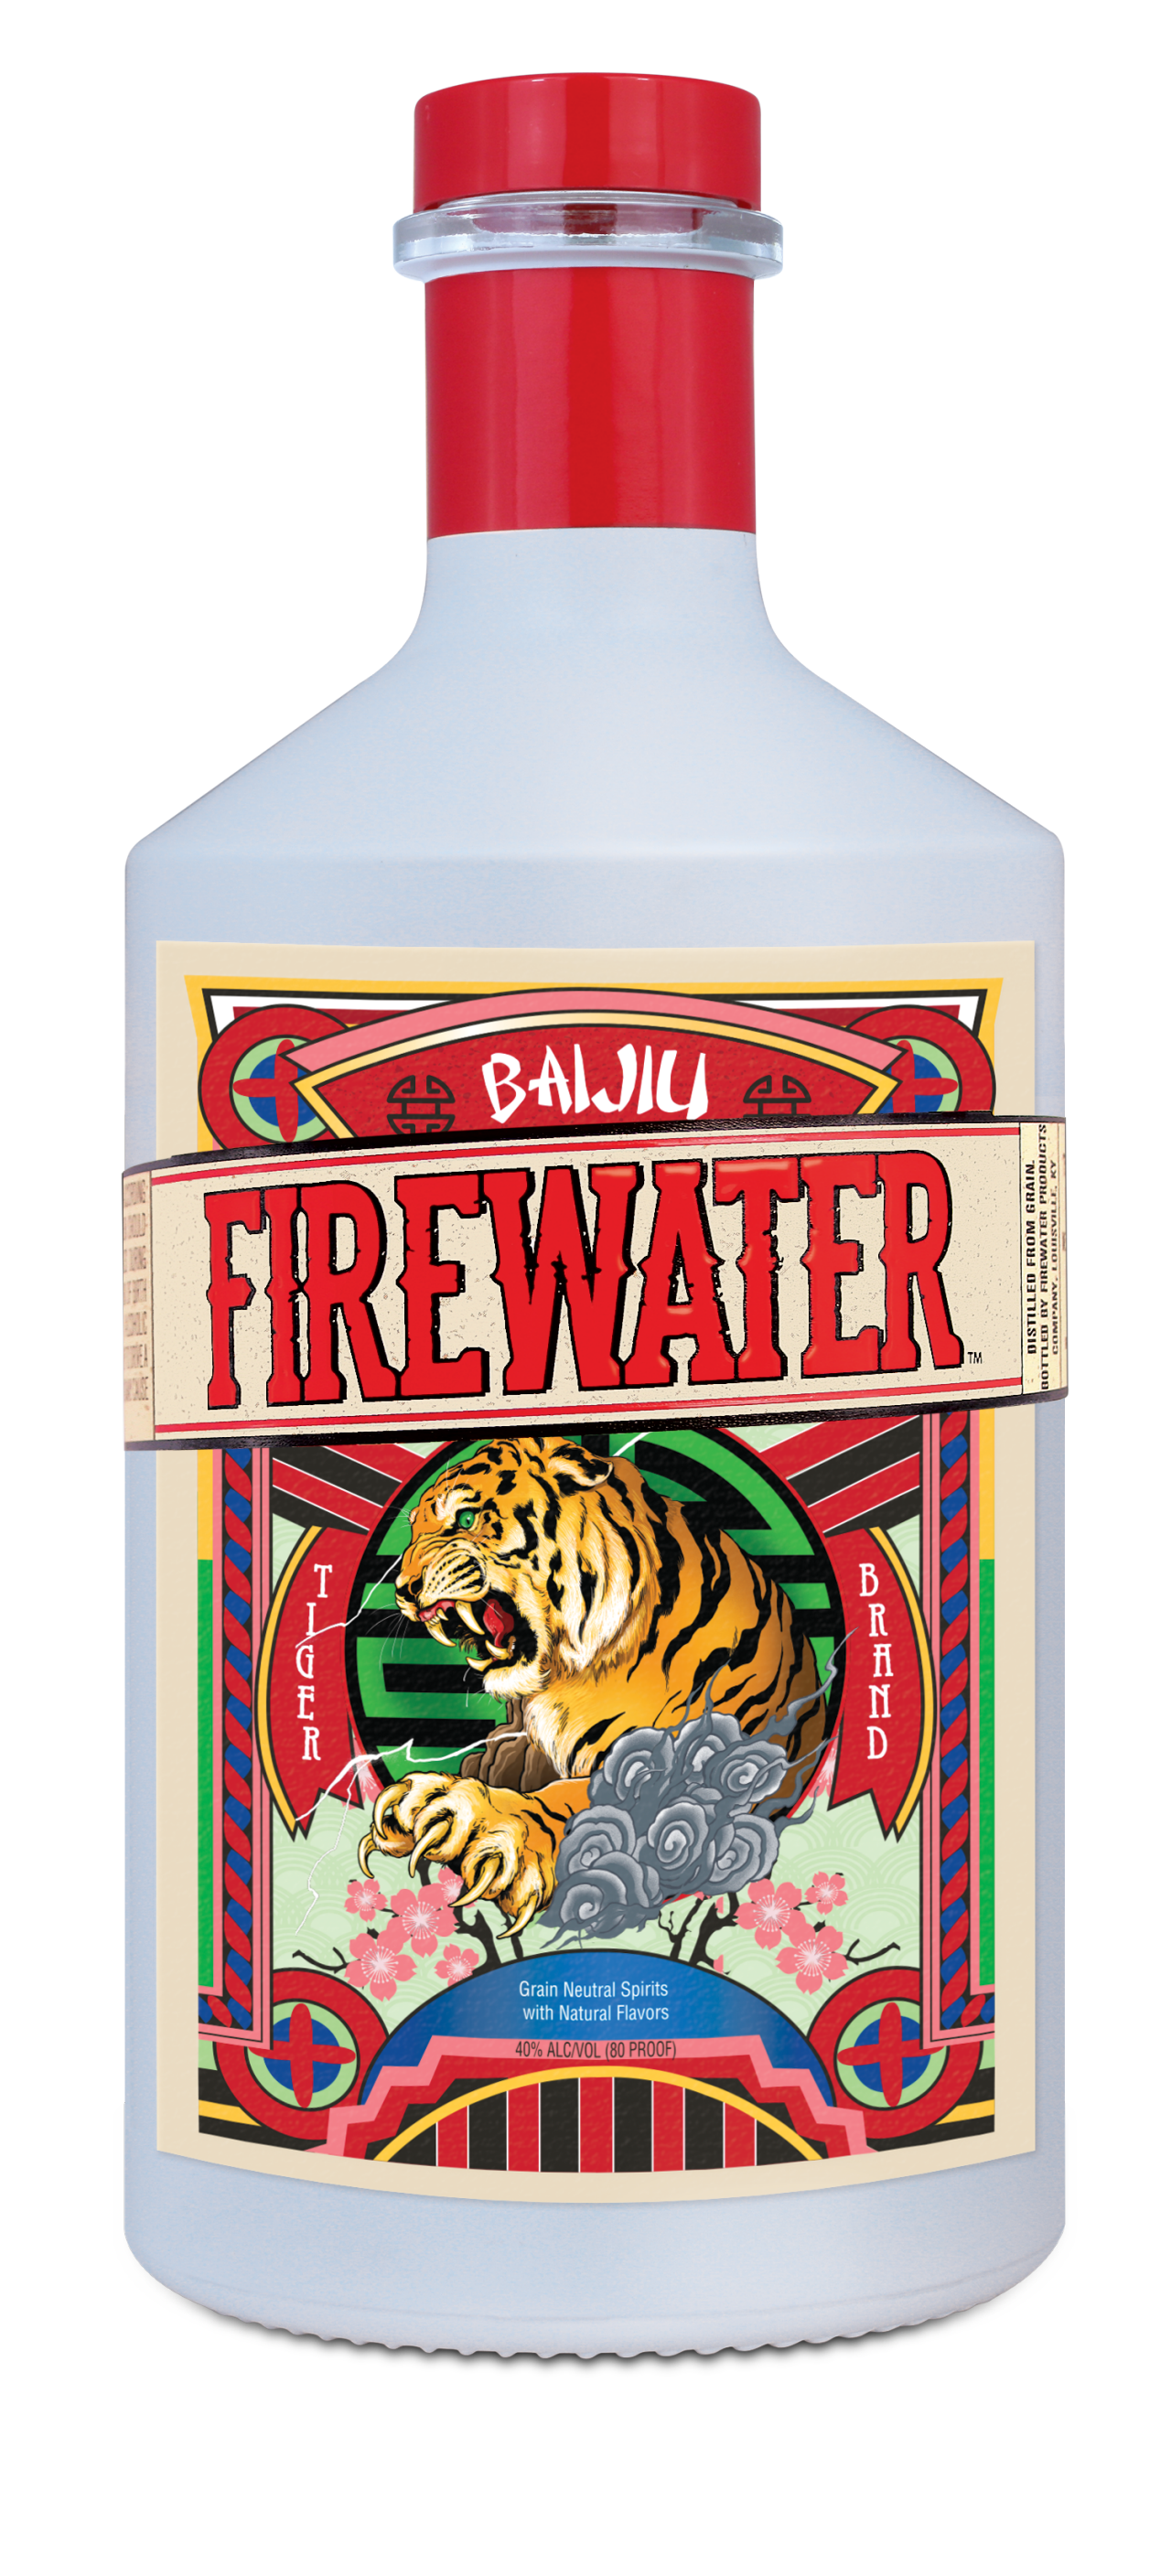 Firewater Bottle